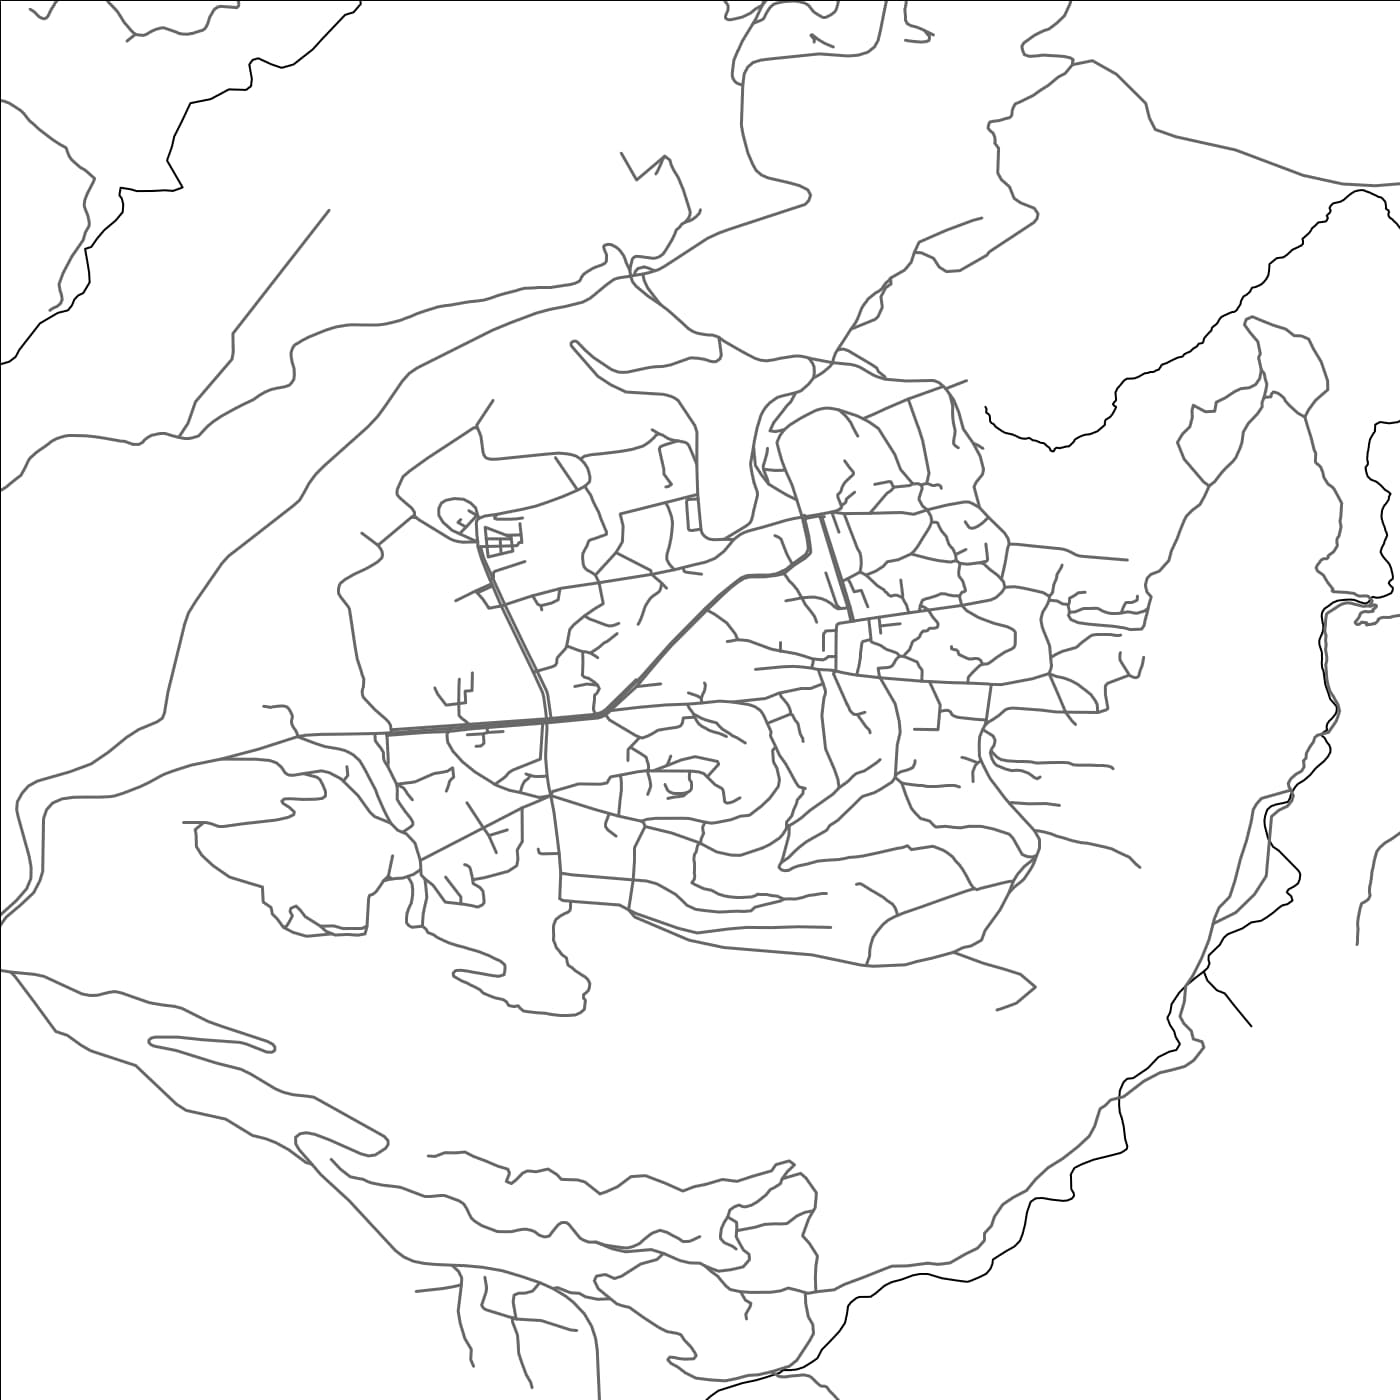 ROAD MAP OF SUSA, AZERBAIJAN BY MAPBAKES